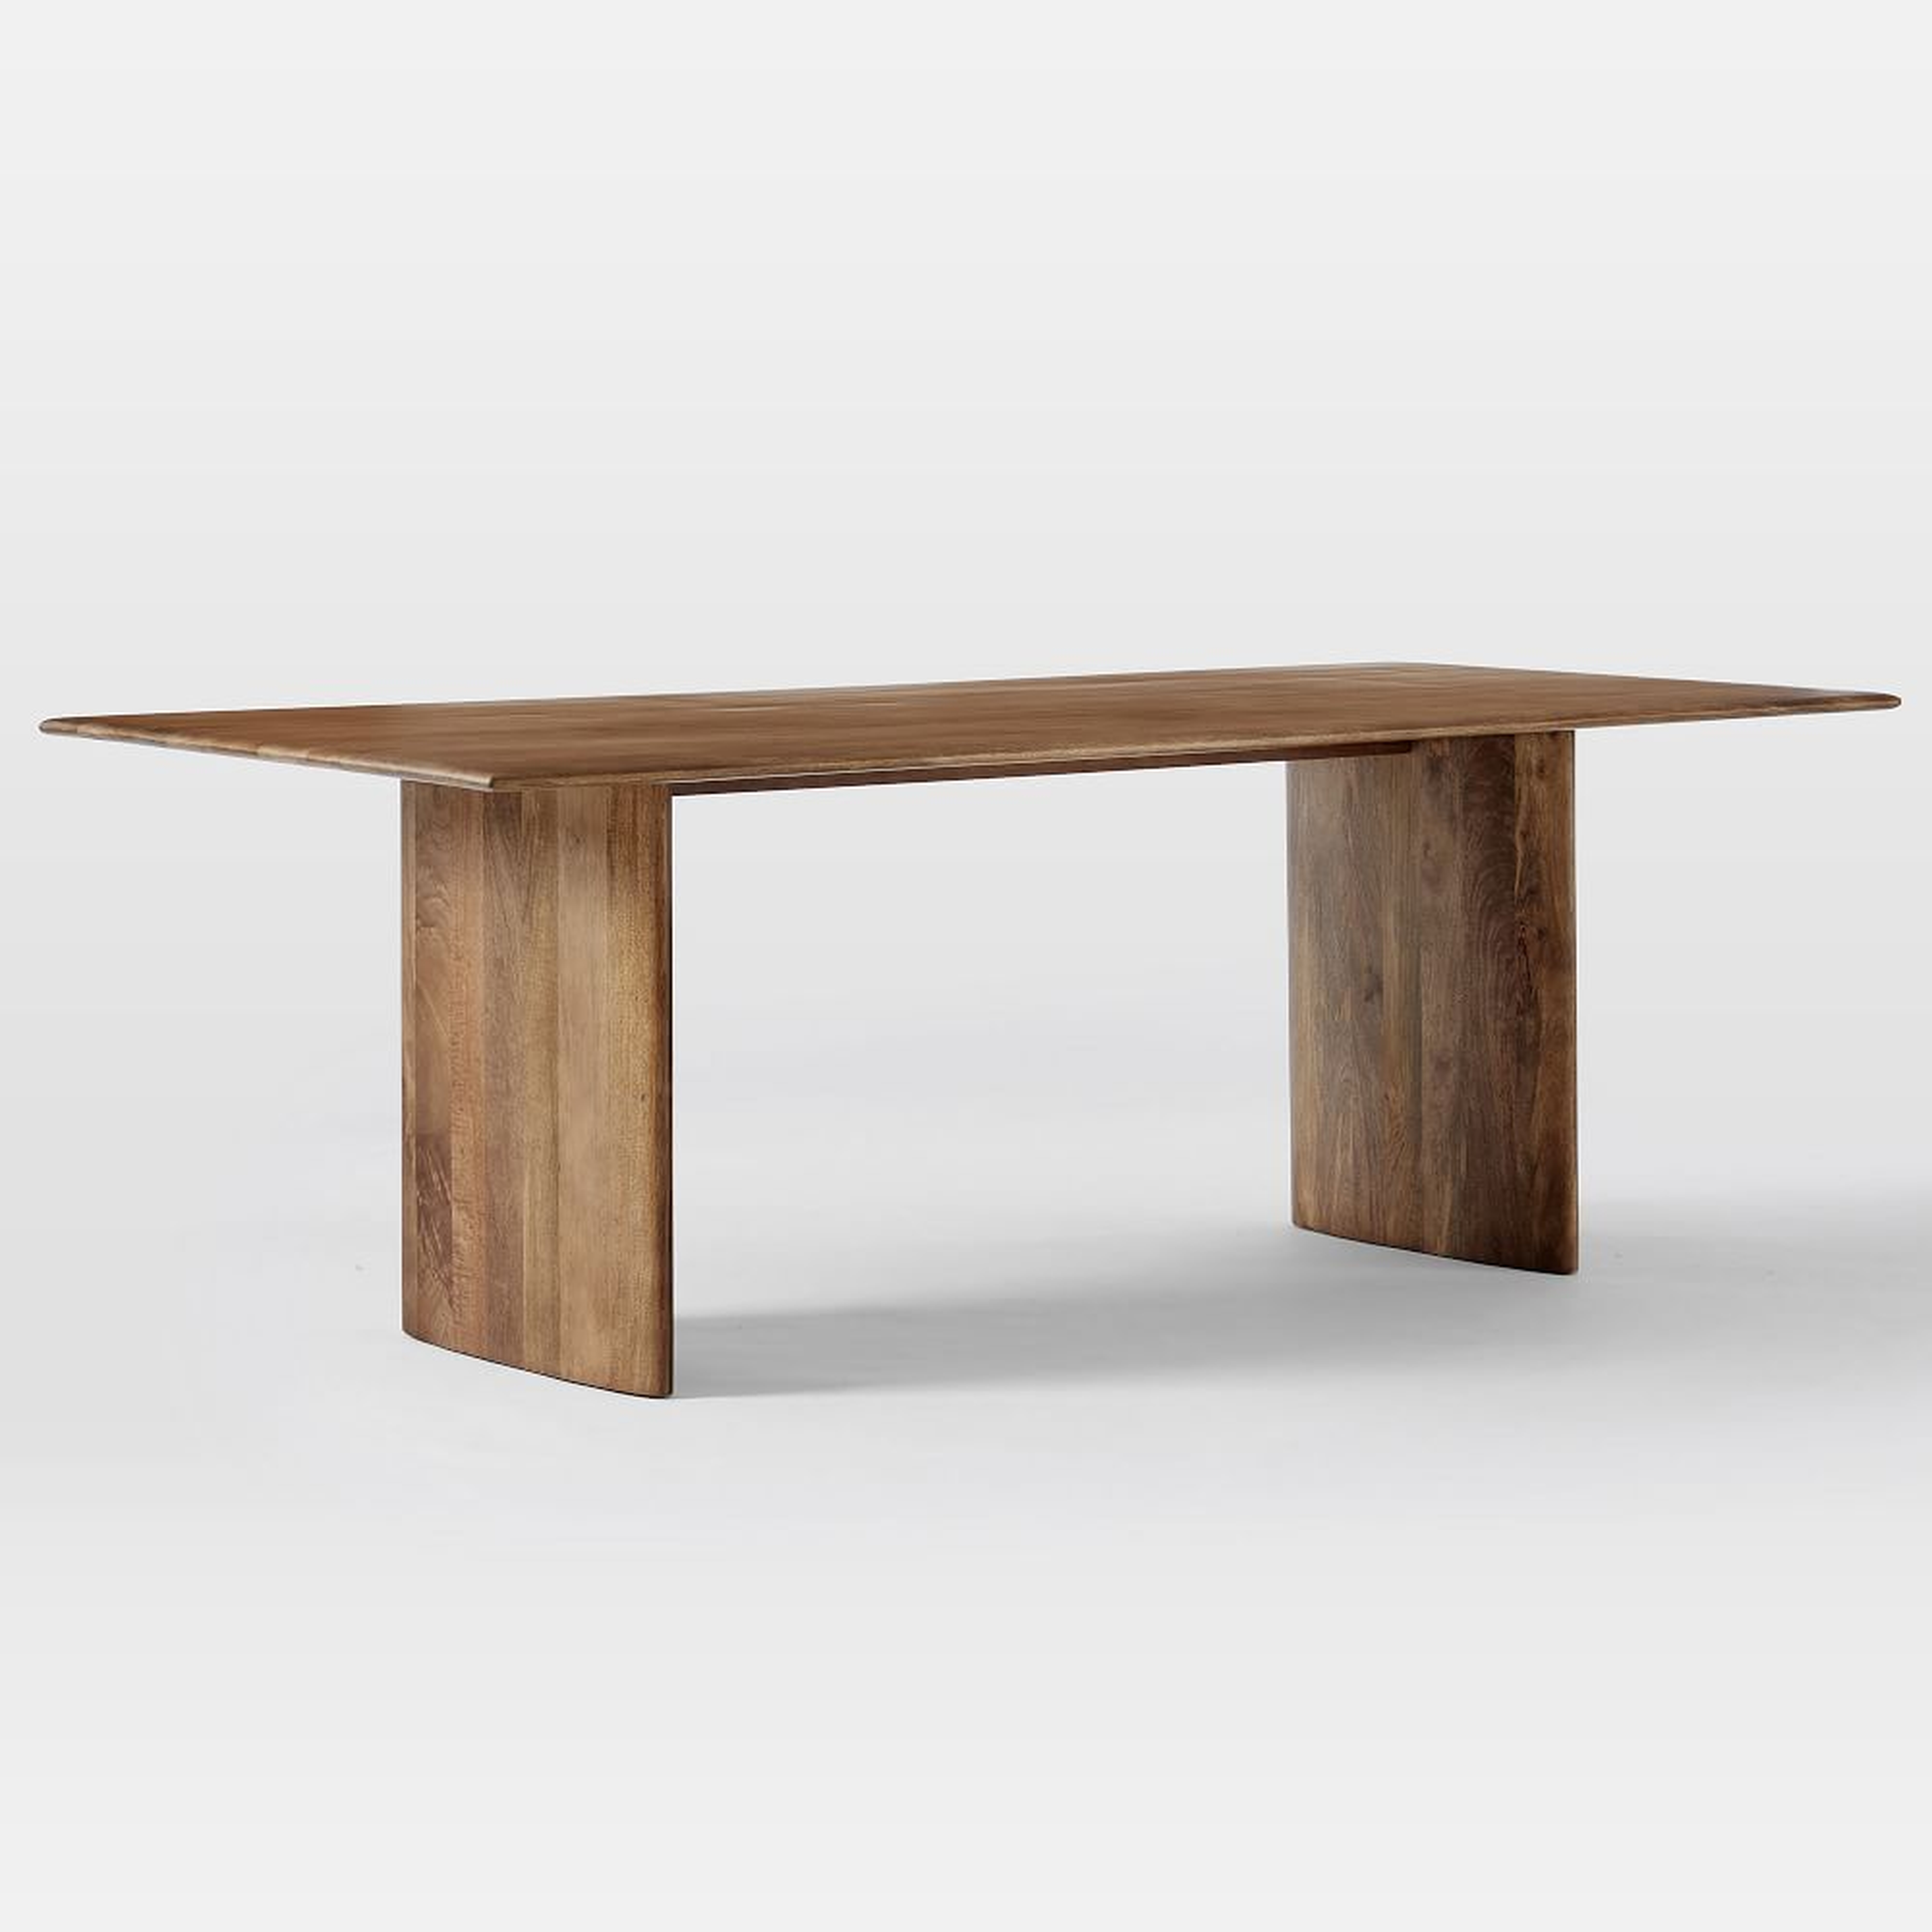 Anton Solid Wood Dining Table, 86", Burnt Wax - West Elm